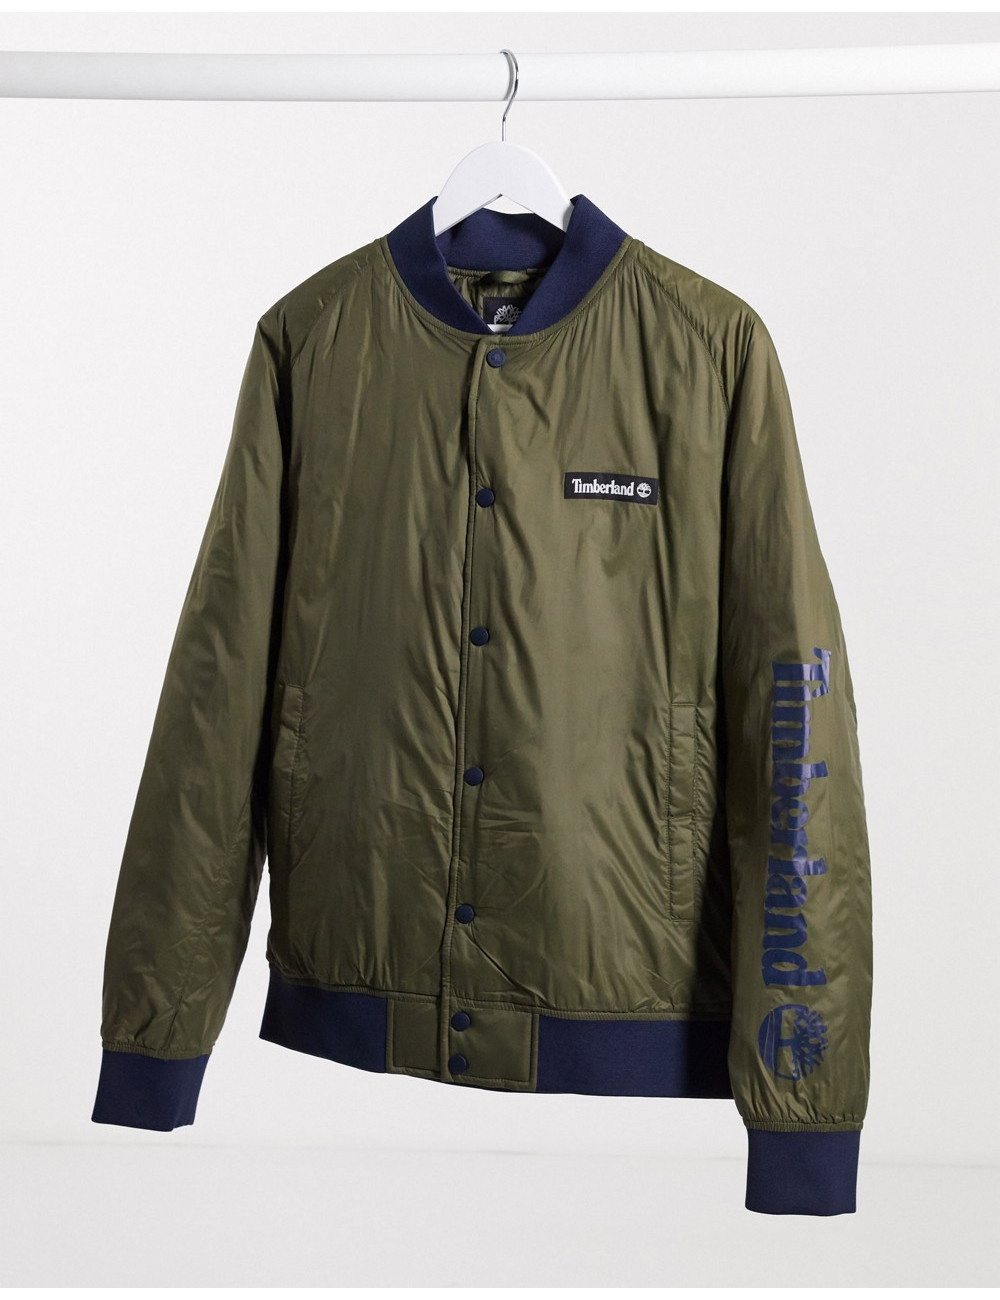 Timberland varsity jacket